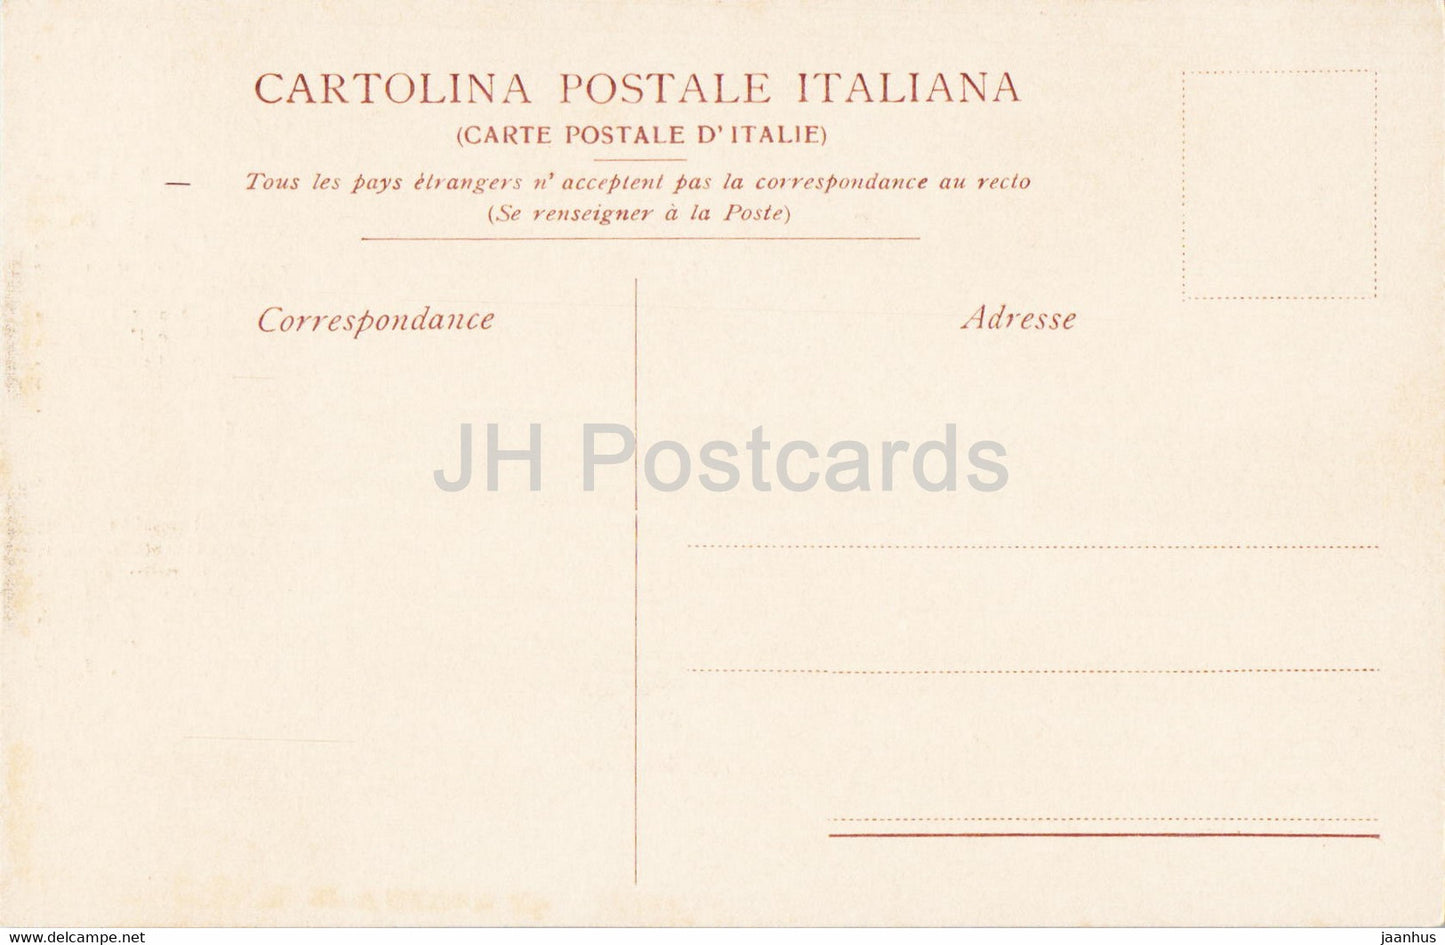 Syracuse - La Fonte Aretusa - 3 - carte postale ancienne - Italie - inutilisée